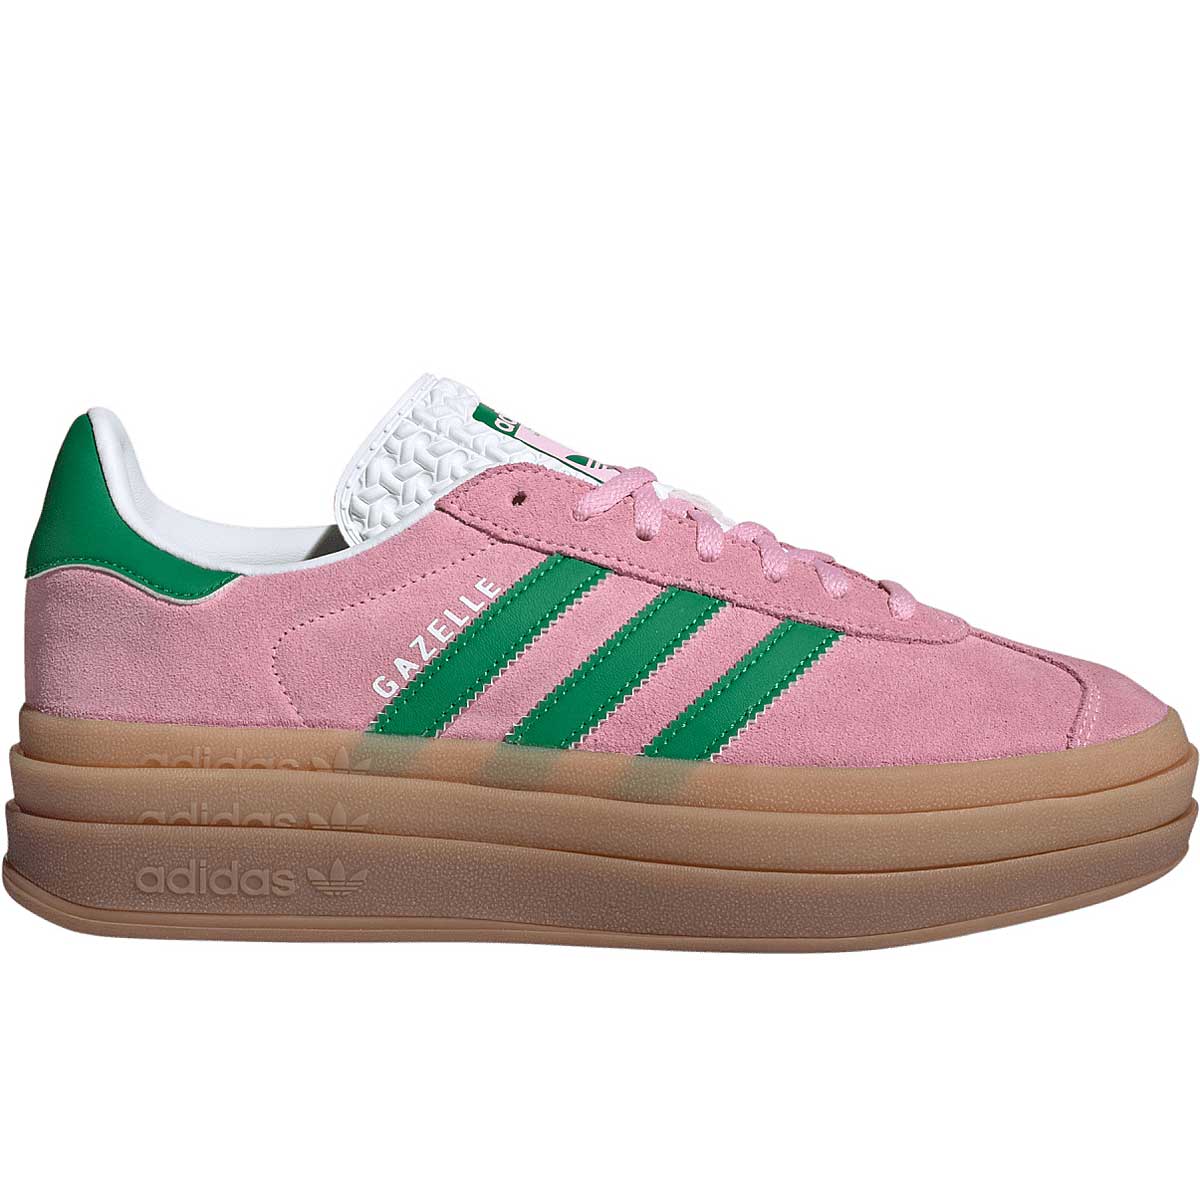 Adidas Originals Gazelle Bold, Pink/green/white EU40